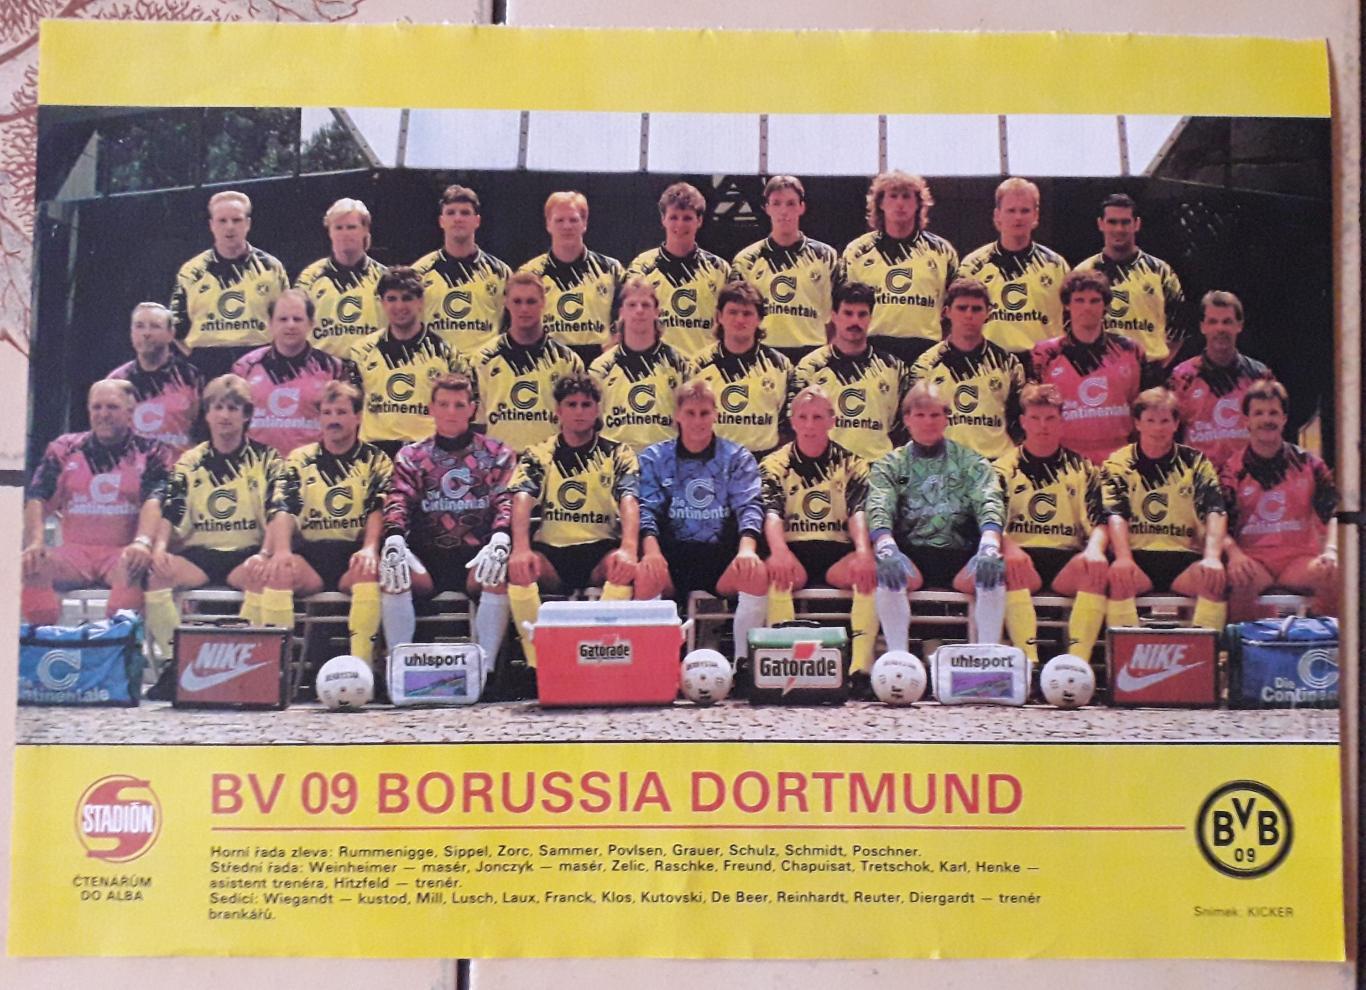 Borussia Dortmund.Плакат формата А4 из журнала Stadion.